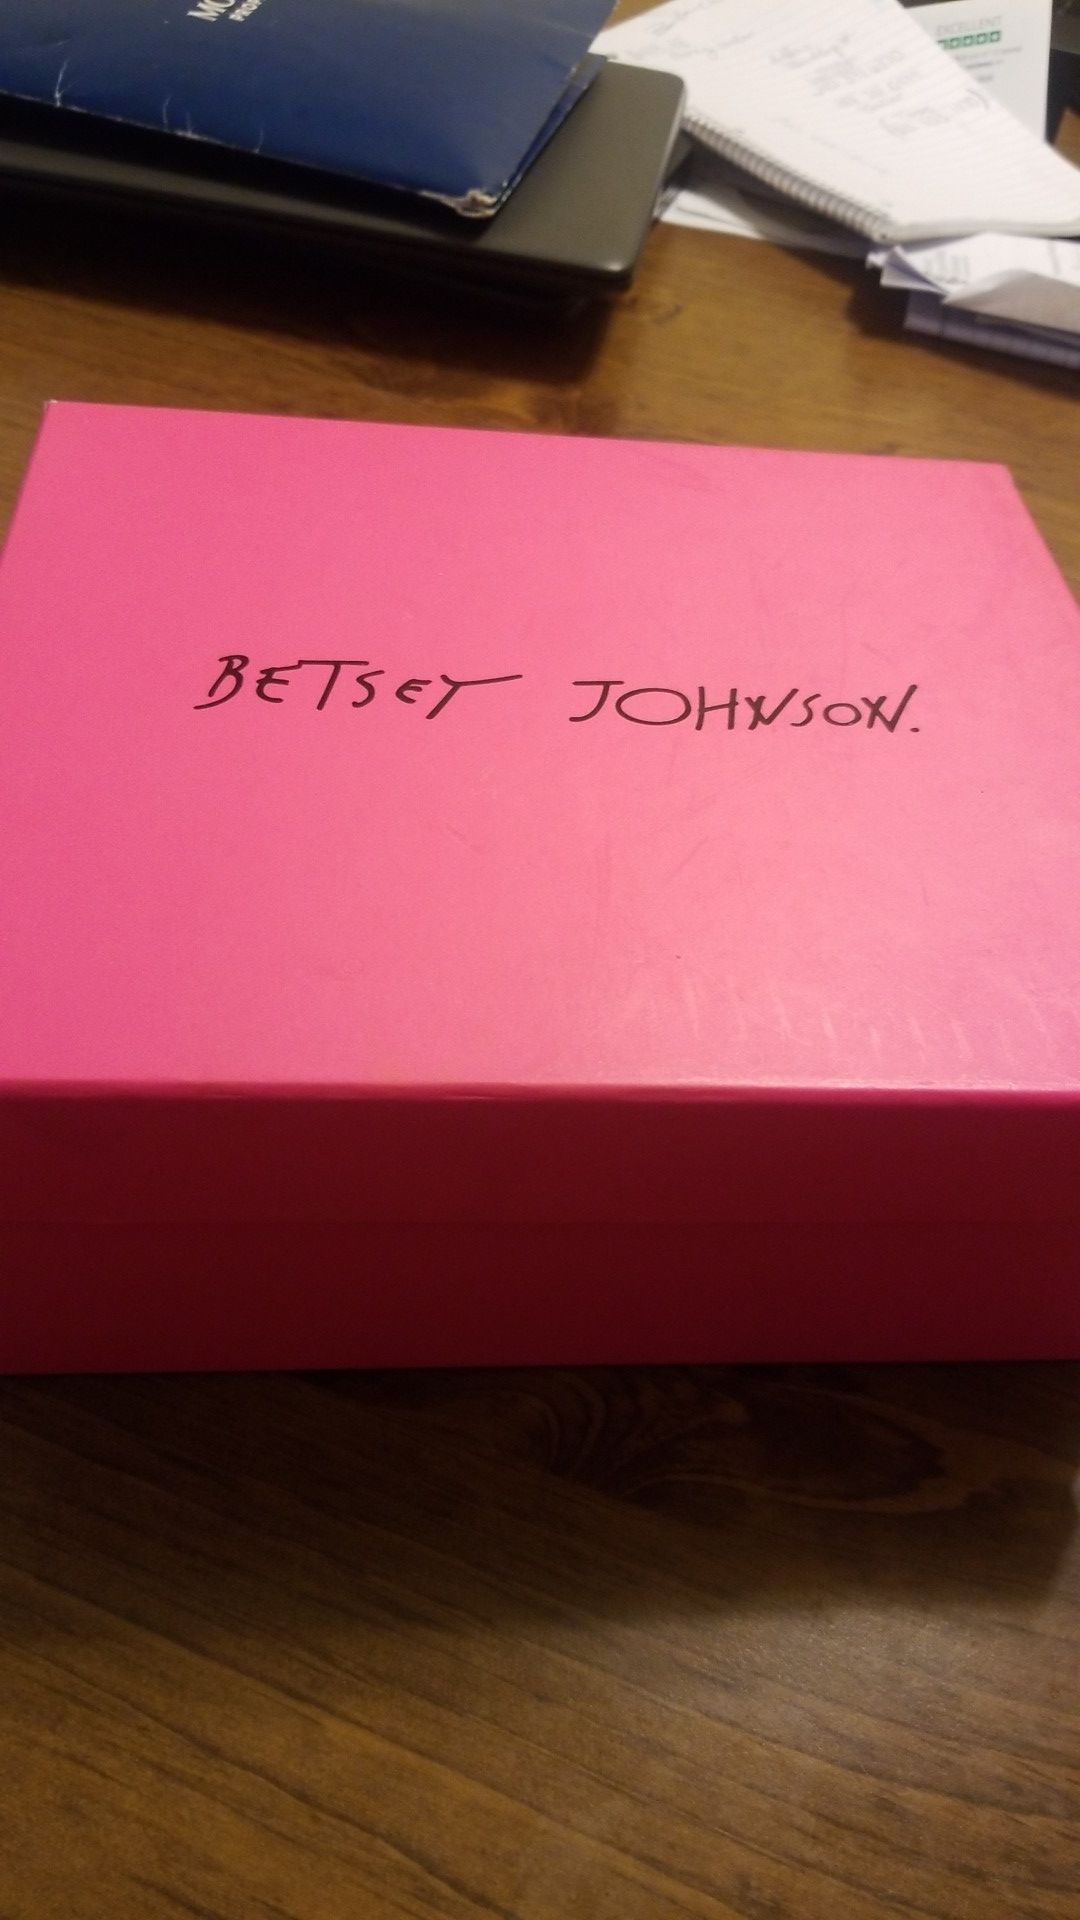 Hadly Blk Pk Dot Size 7 Betsy Johnson heels brand new